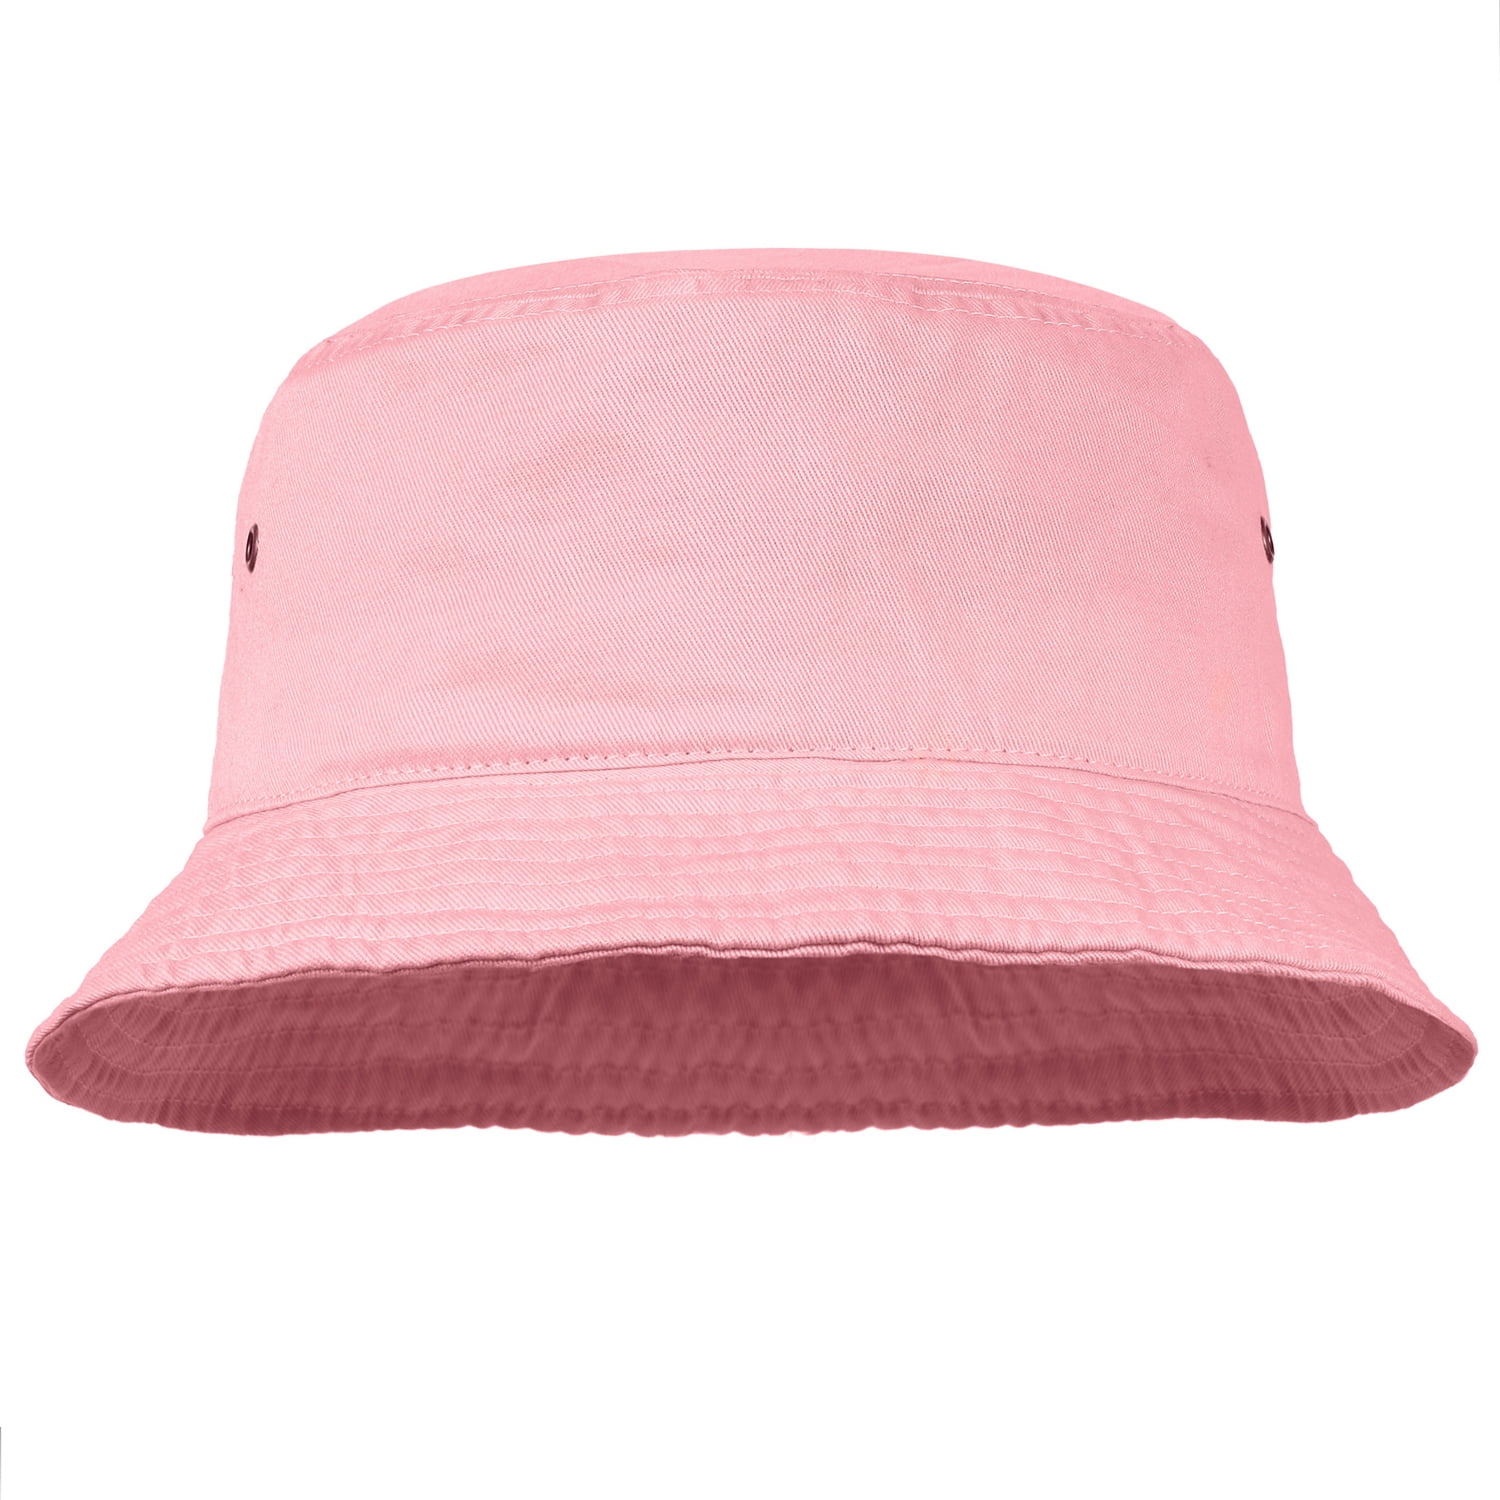 Bucket Hat for Men Women Unisex 100% Cotton Packable Foldable Summer Travel  Beach Outdoor Fishing Hat - LXL Light Pink